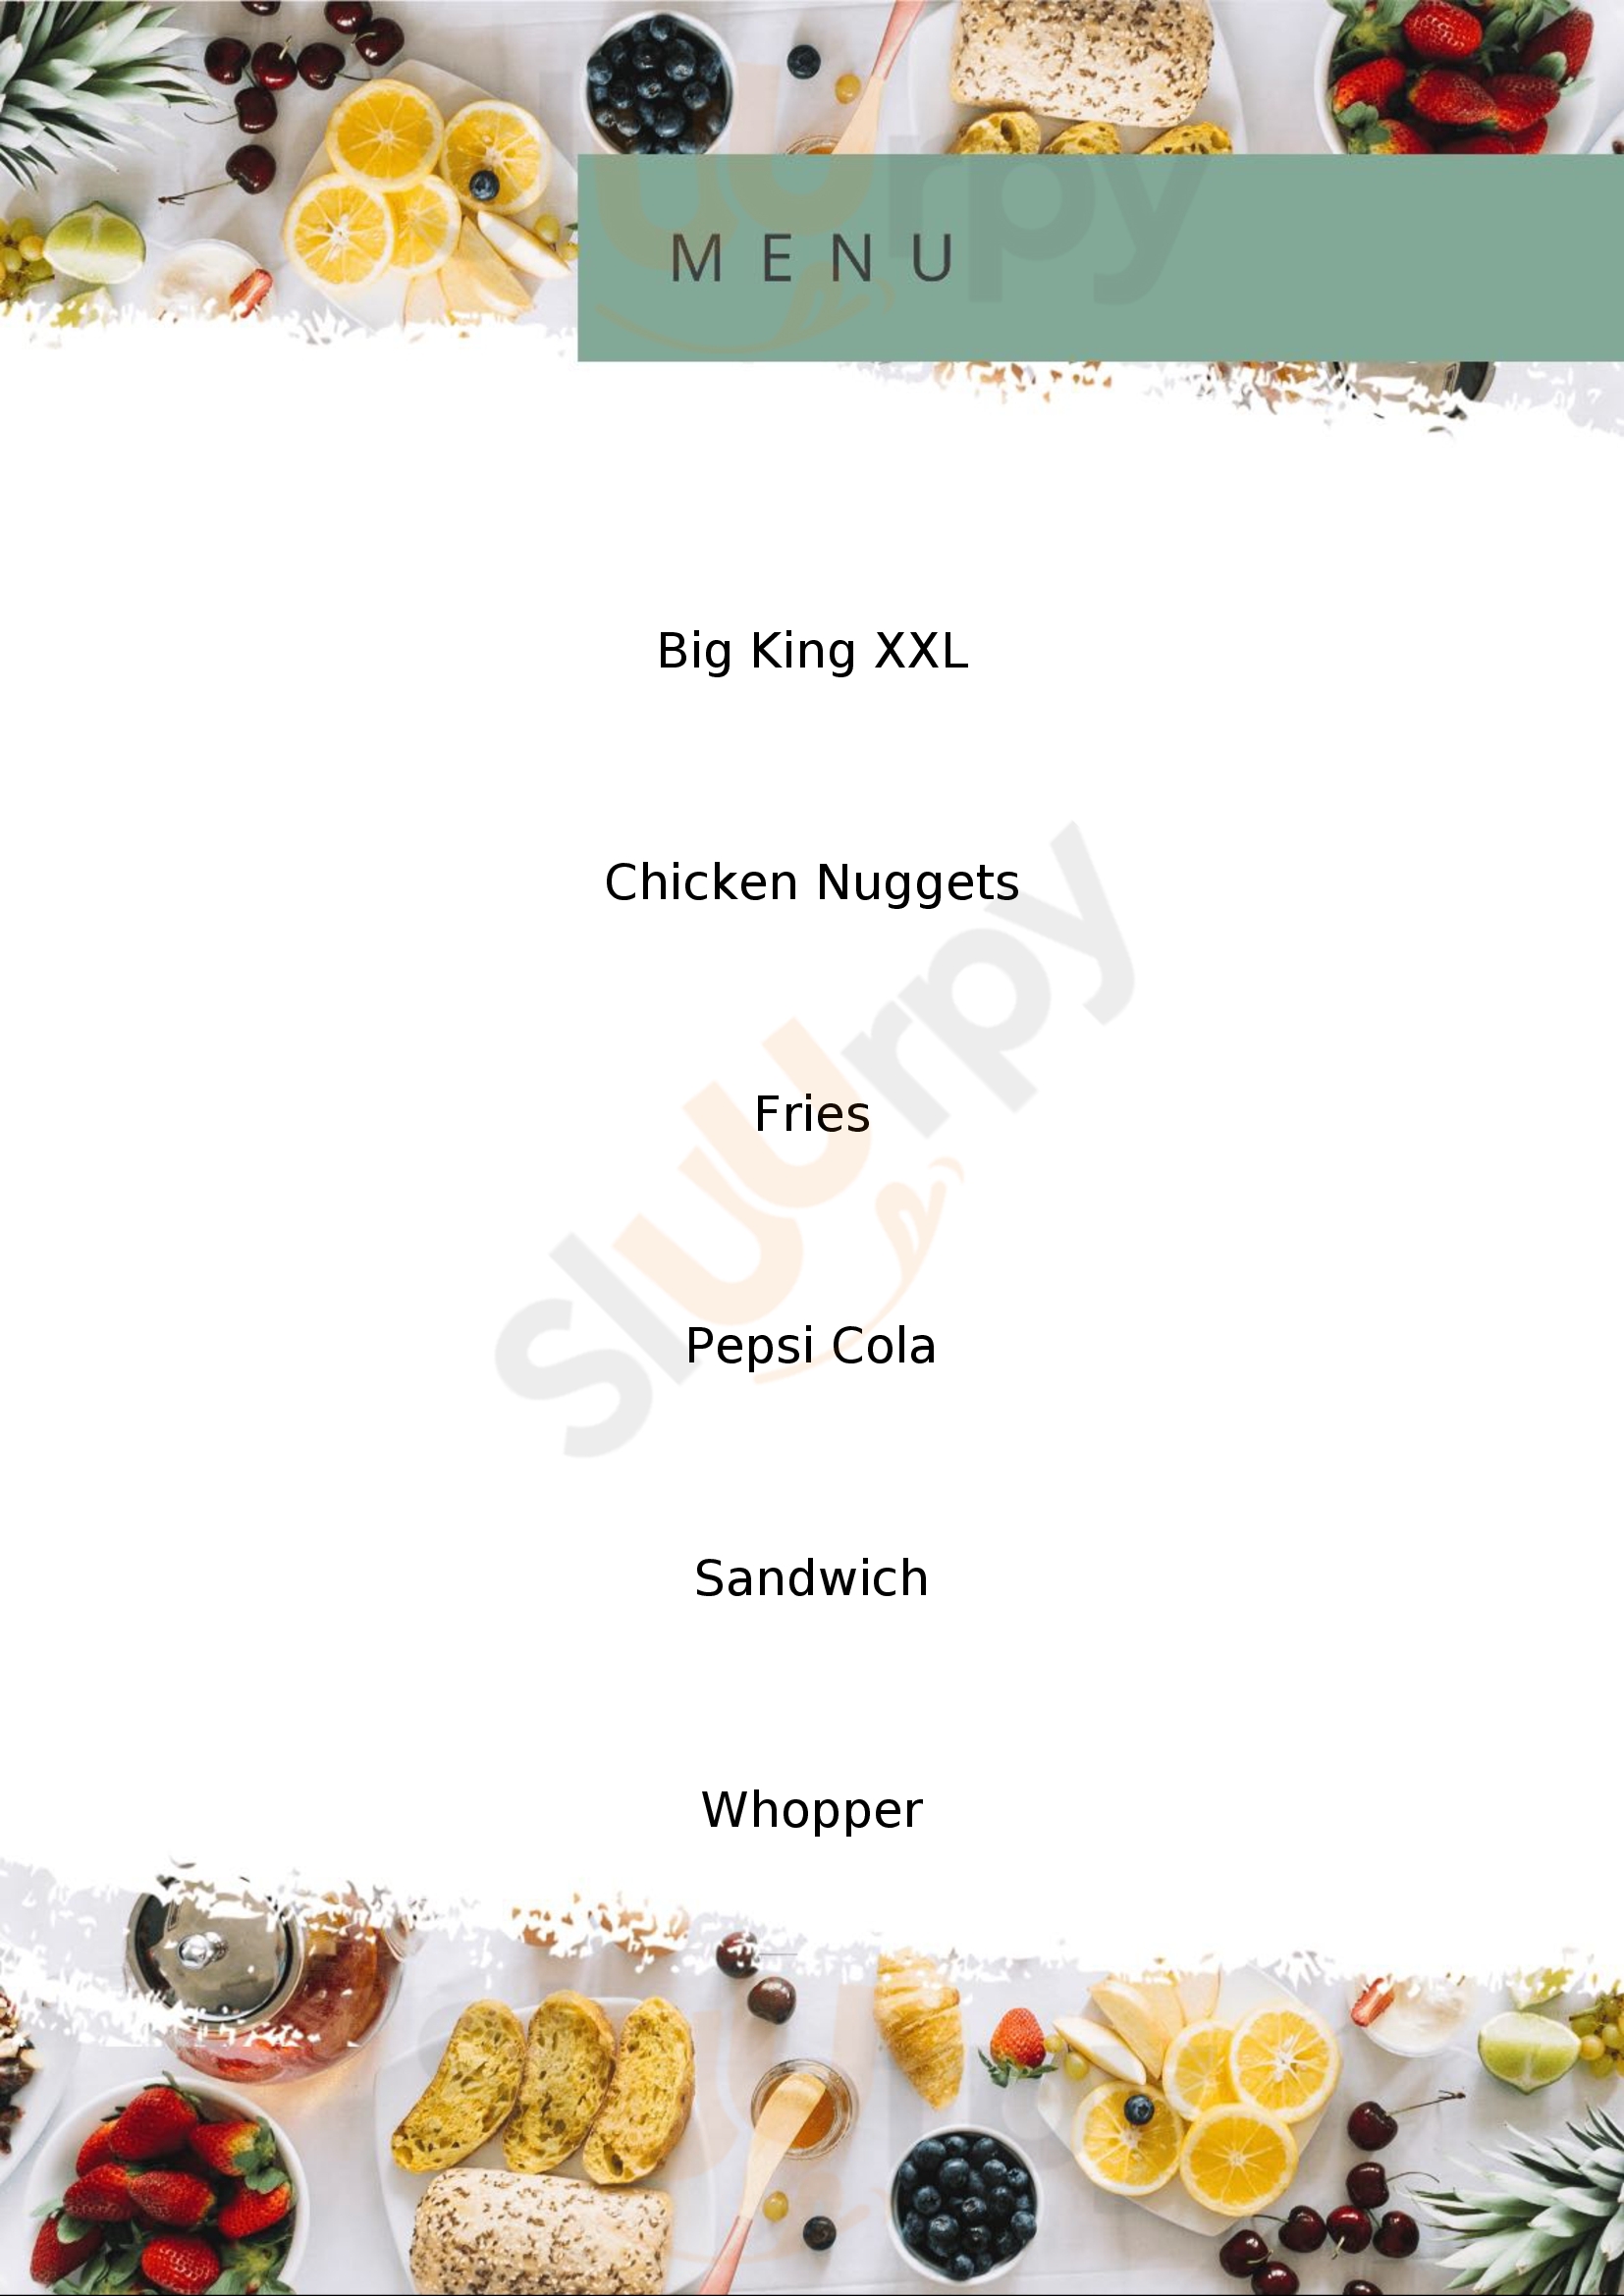 Burger King Allen's Nek (drive-thru) Roodepoort Menu - 1